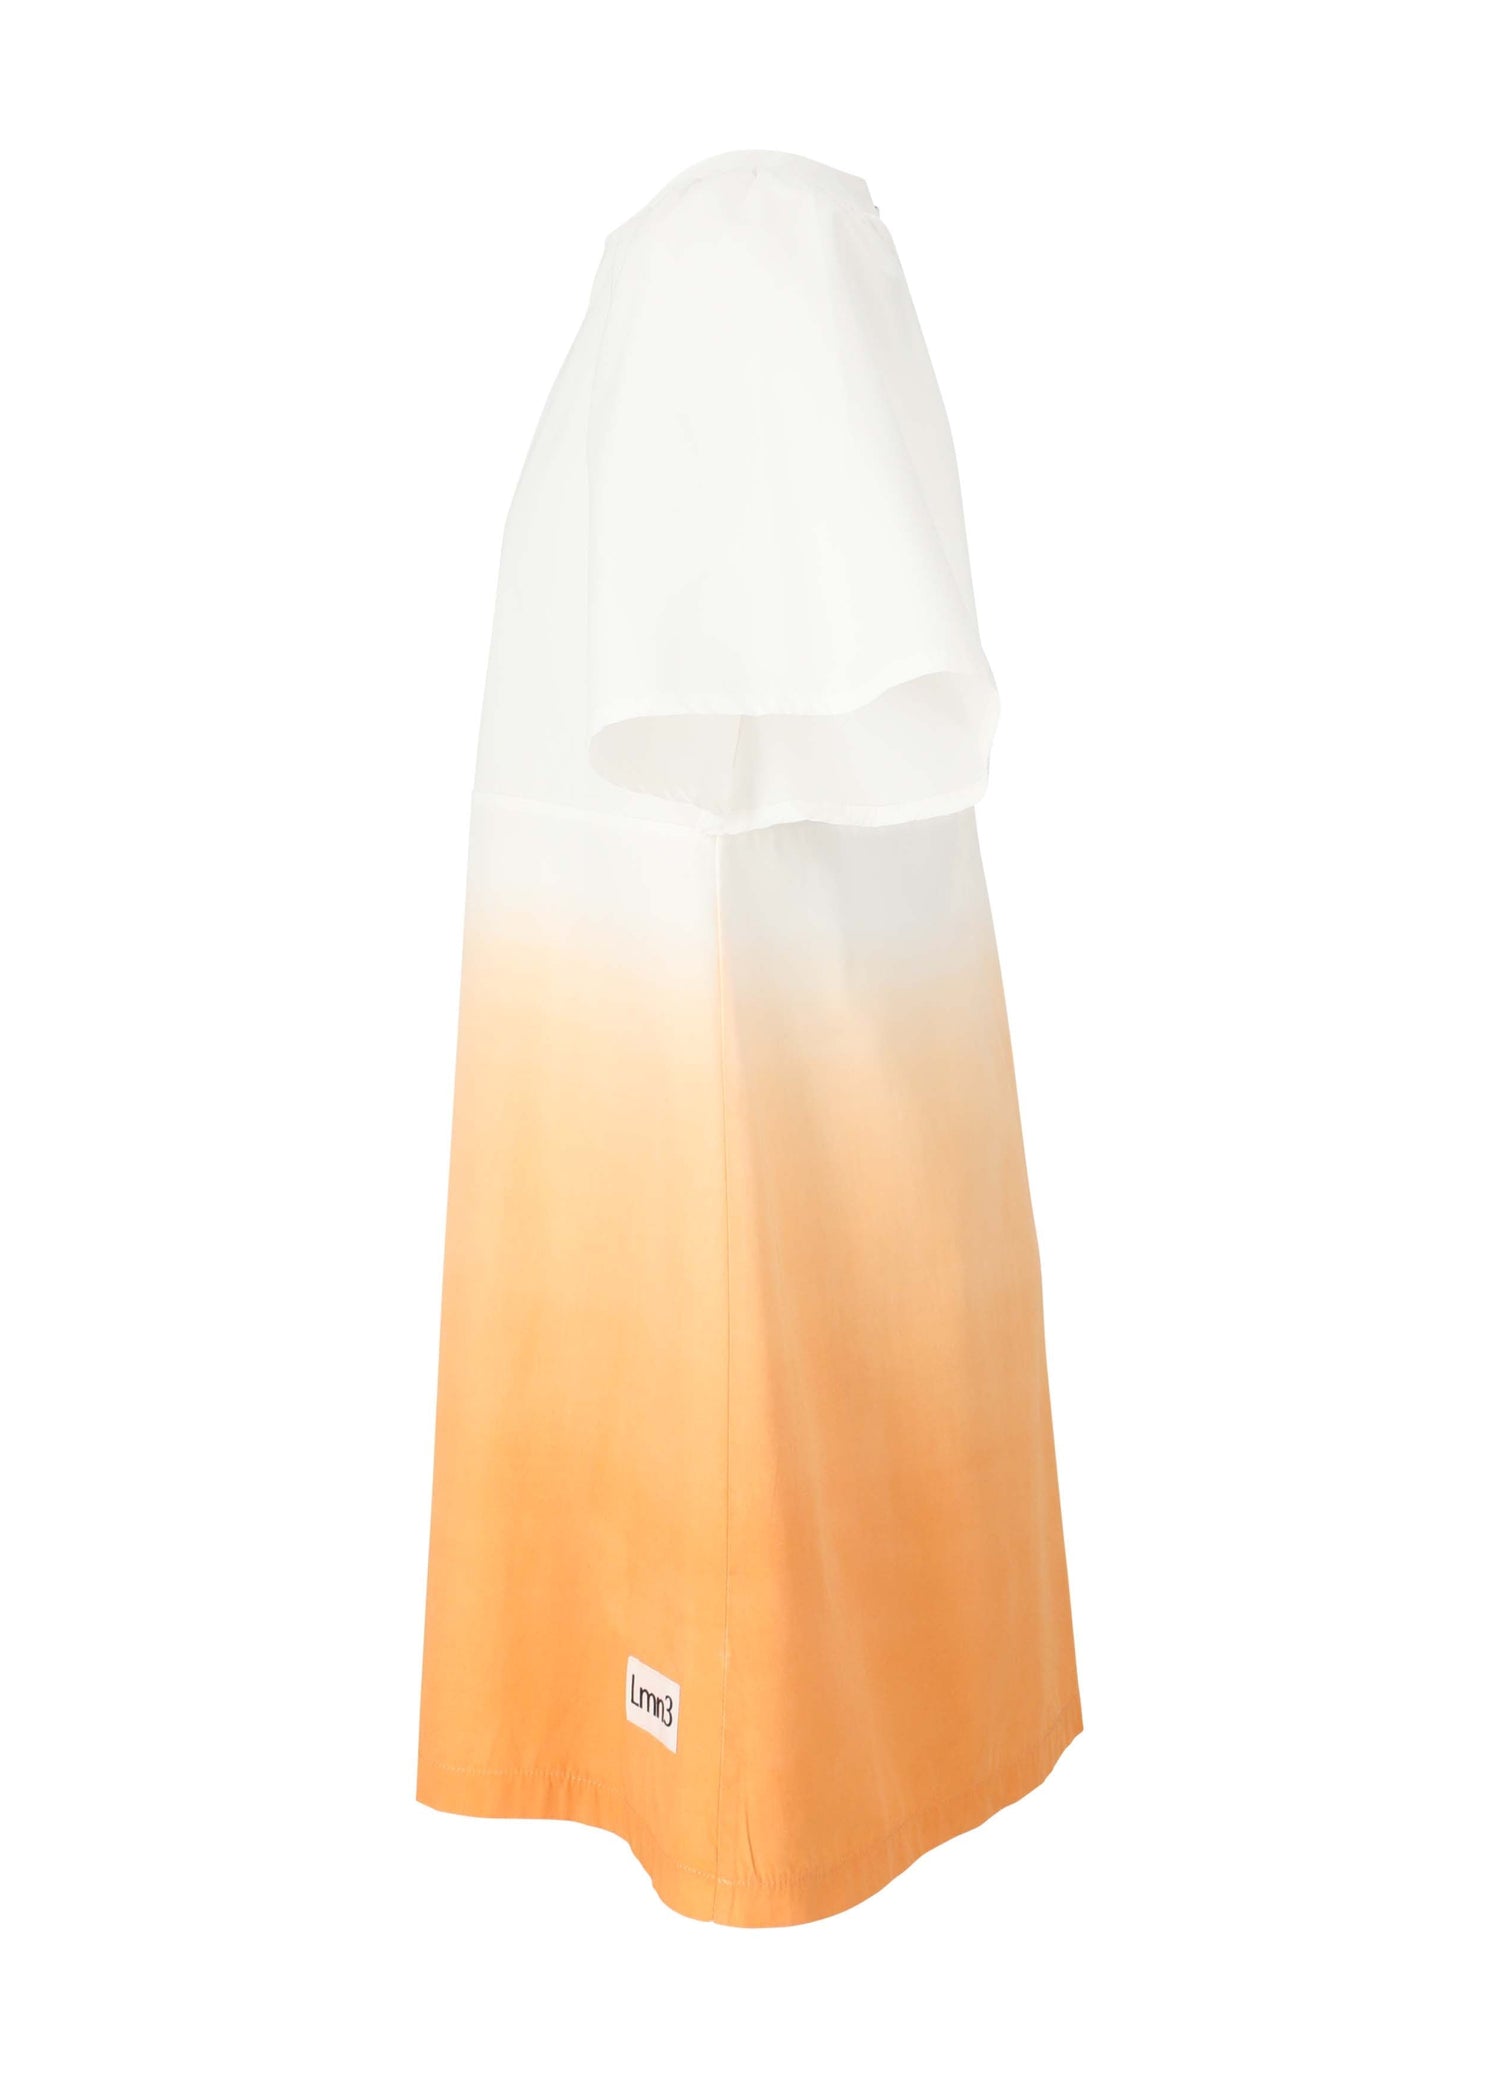 Dress No. 16 - Mango Dresses LMN3 